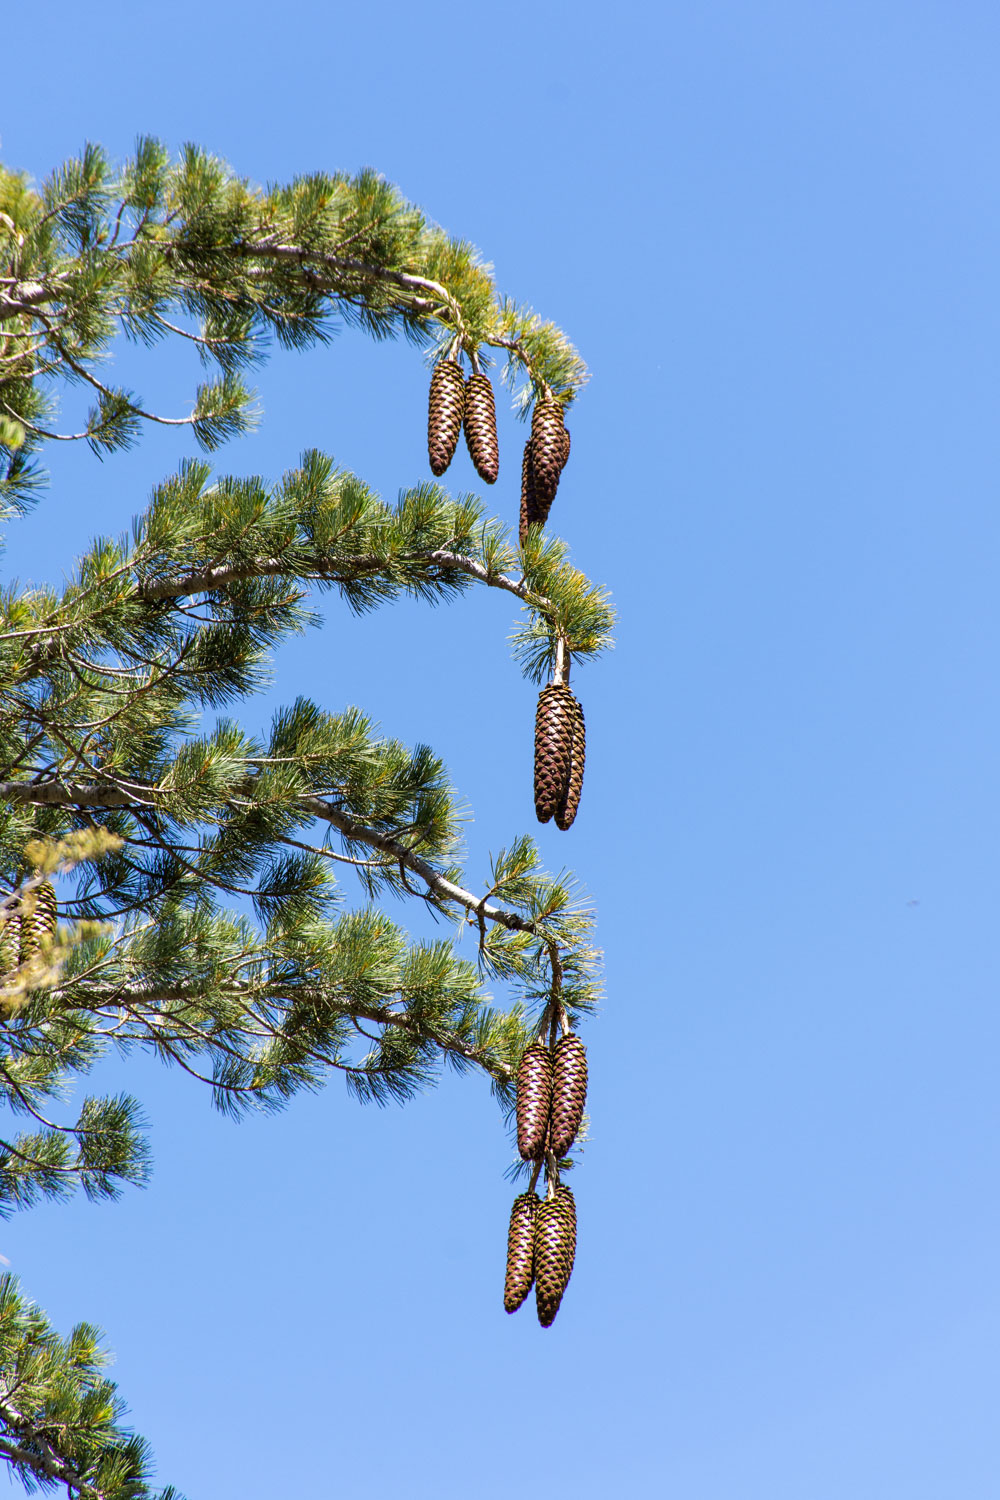 Sugar Pine (Pinus lambertiana) with Cones